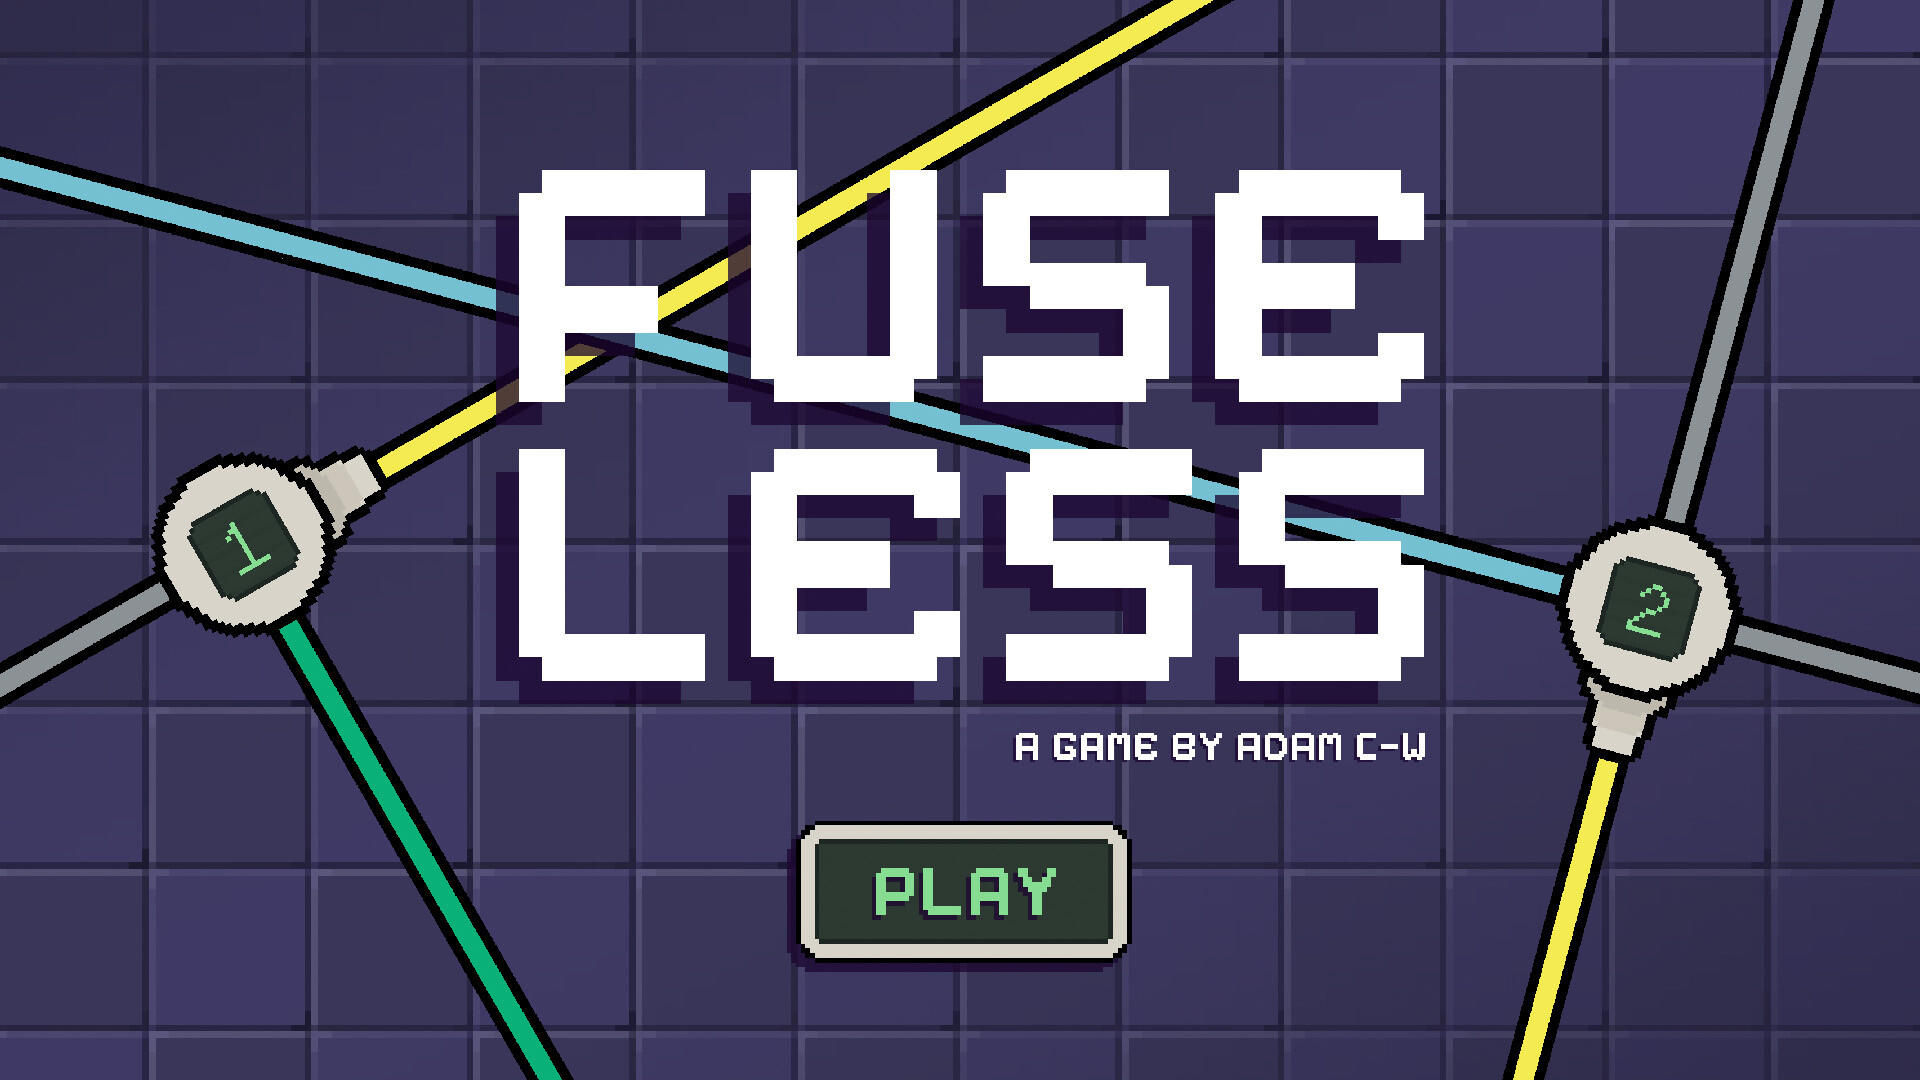 Fuseless screenshot game